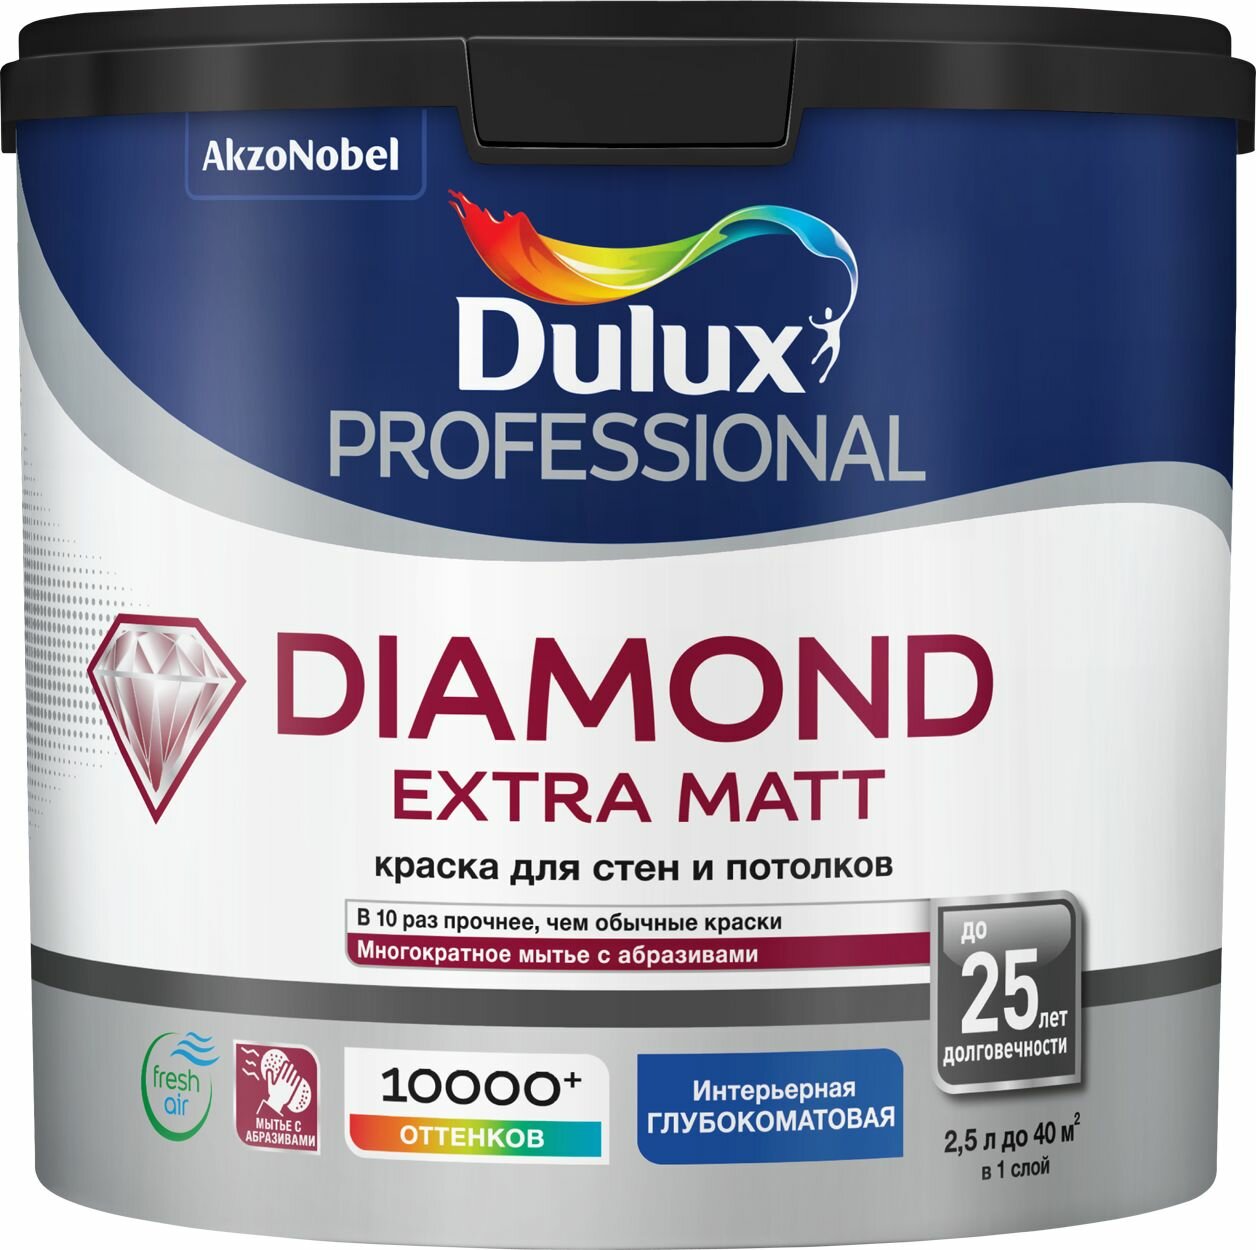 DULUX DIAMOND EXTRA MATT краска для стен и потолков глубокоматовая база BC (225л)